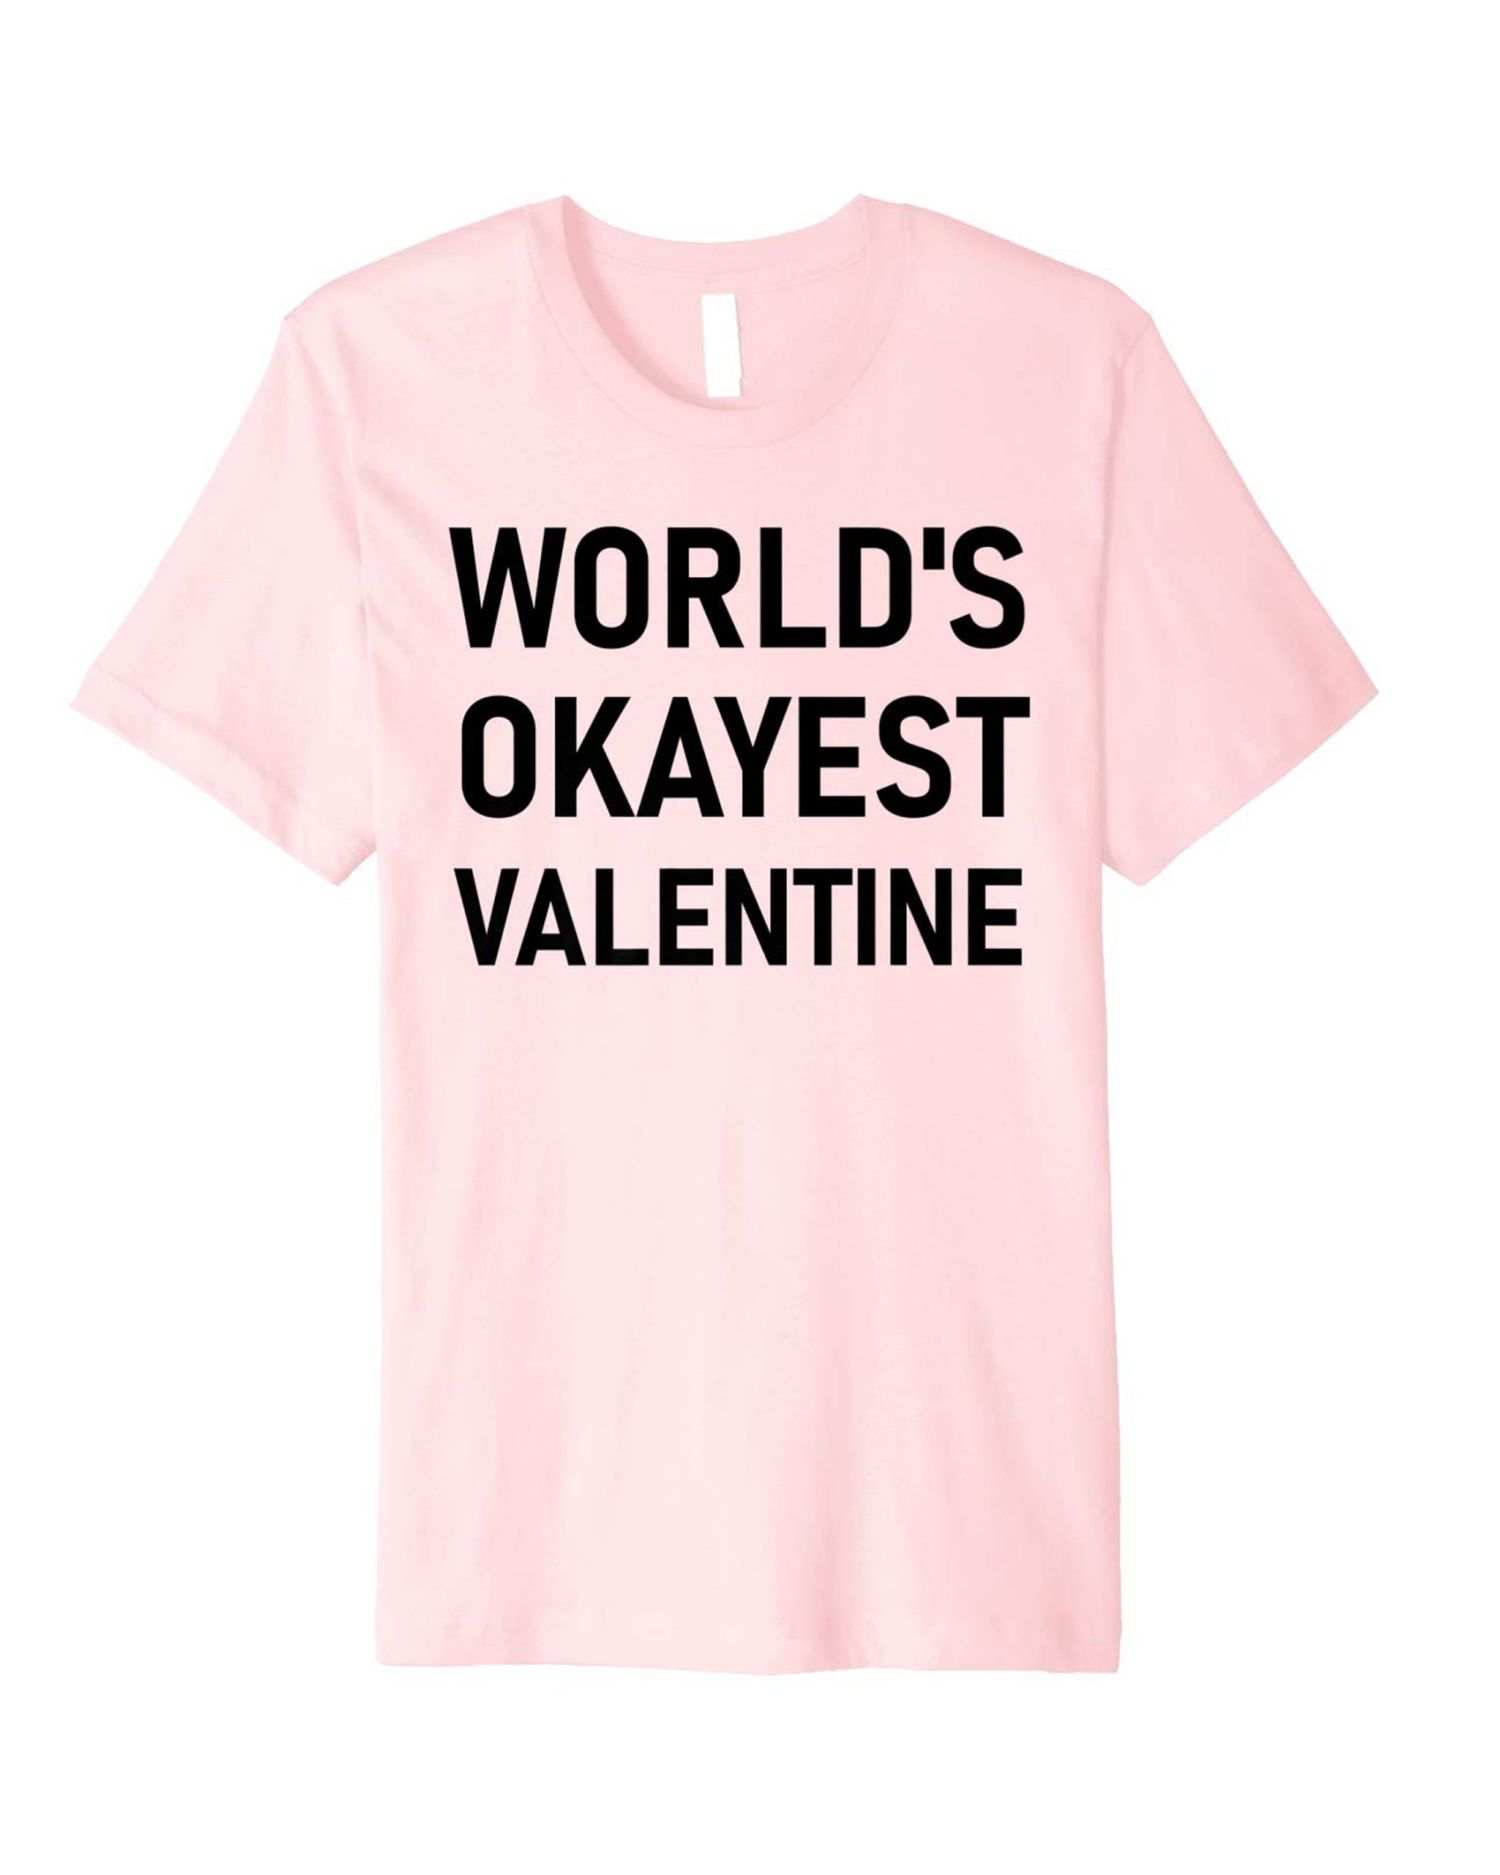 Funny Valentines Day Gifts Ideas: World's Okayest Valentine T-Shirt